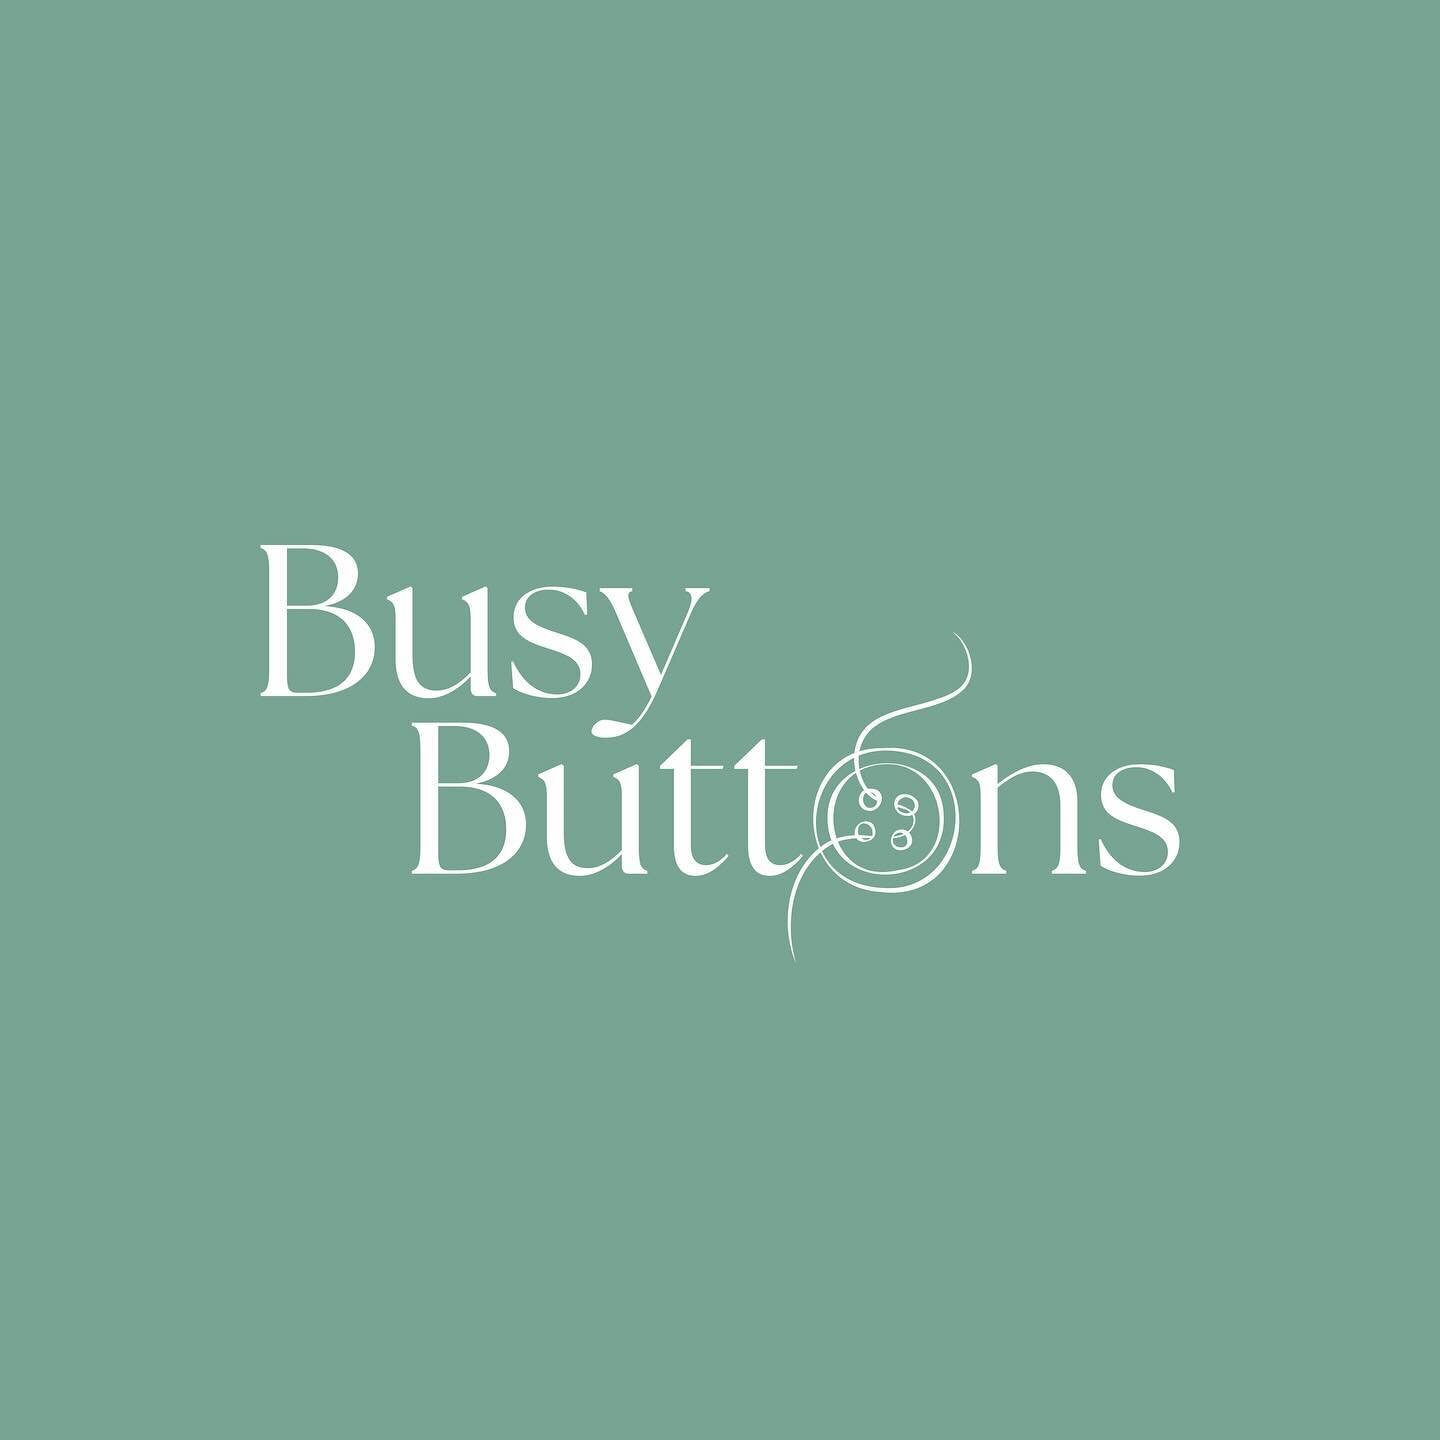 Introducing Busy Buttons 🪡 A Children&rsquo;s Clothing Brand✨
.
.
.
#freelance #design #branding #identity #logo #fashion #childrenswear #brand #berkshire #design #clothing #clothingbrand #busybuttons